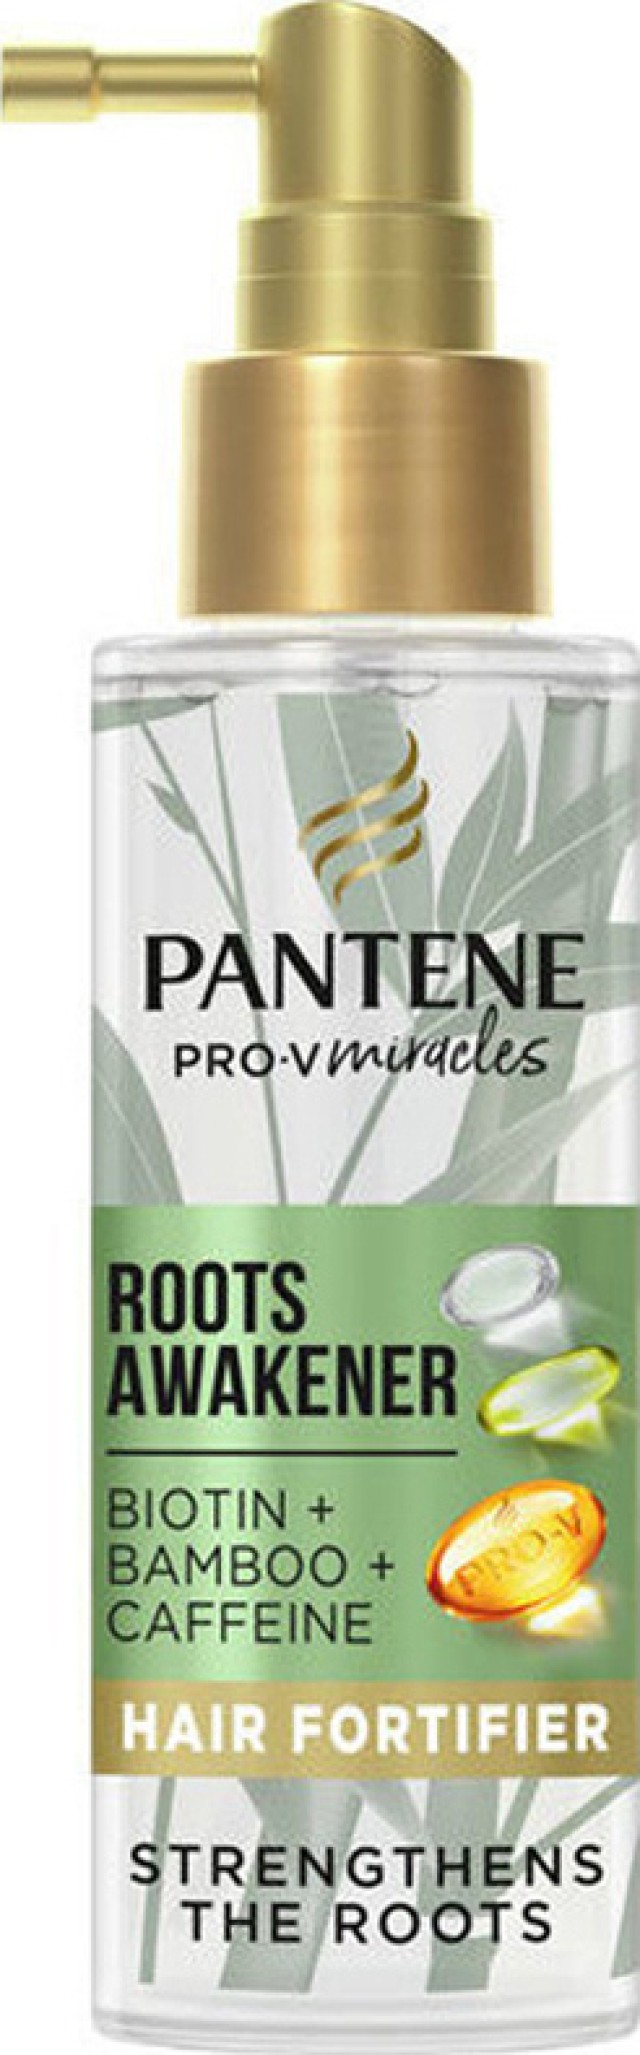 Pantene Pro V Miracles Roots Awakener Με Μπαμπού, Καφεΐνη & Βιοτίνη Για Ενδυνάμωση της Τρίχας 100ml